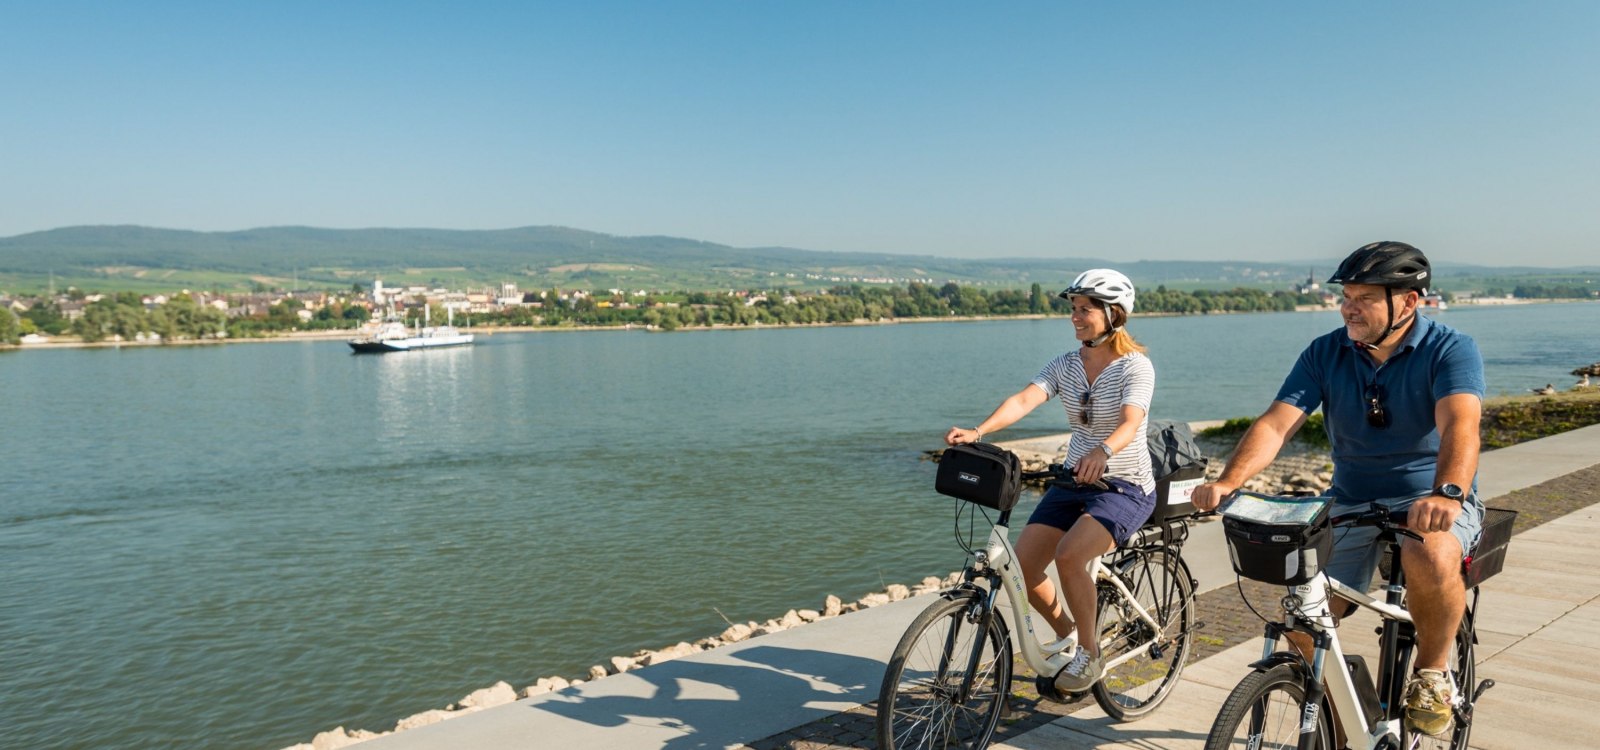 With the E-Bike on the Rhine Cycle Path, © Dominik Ketz